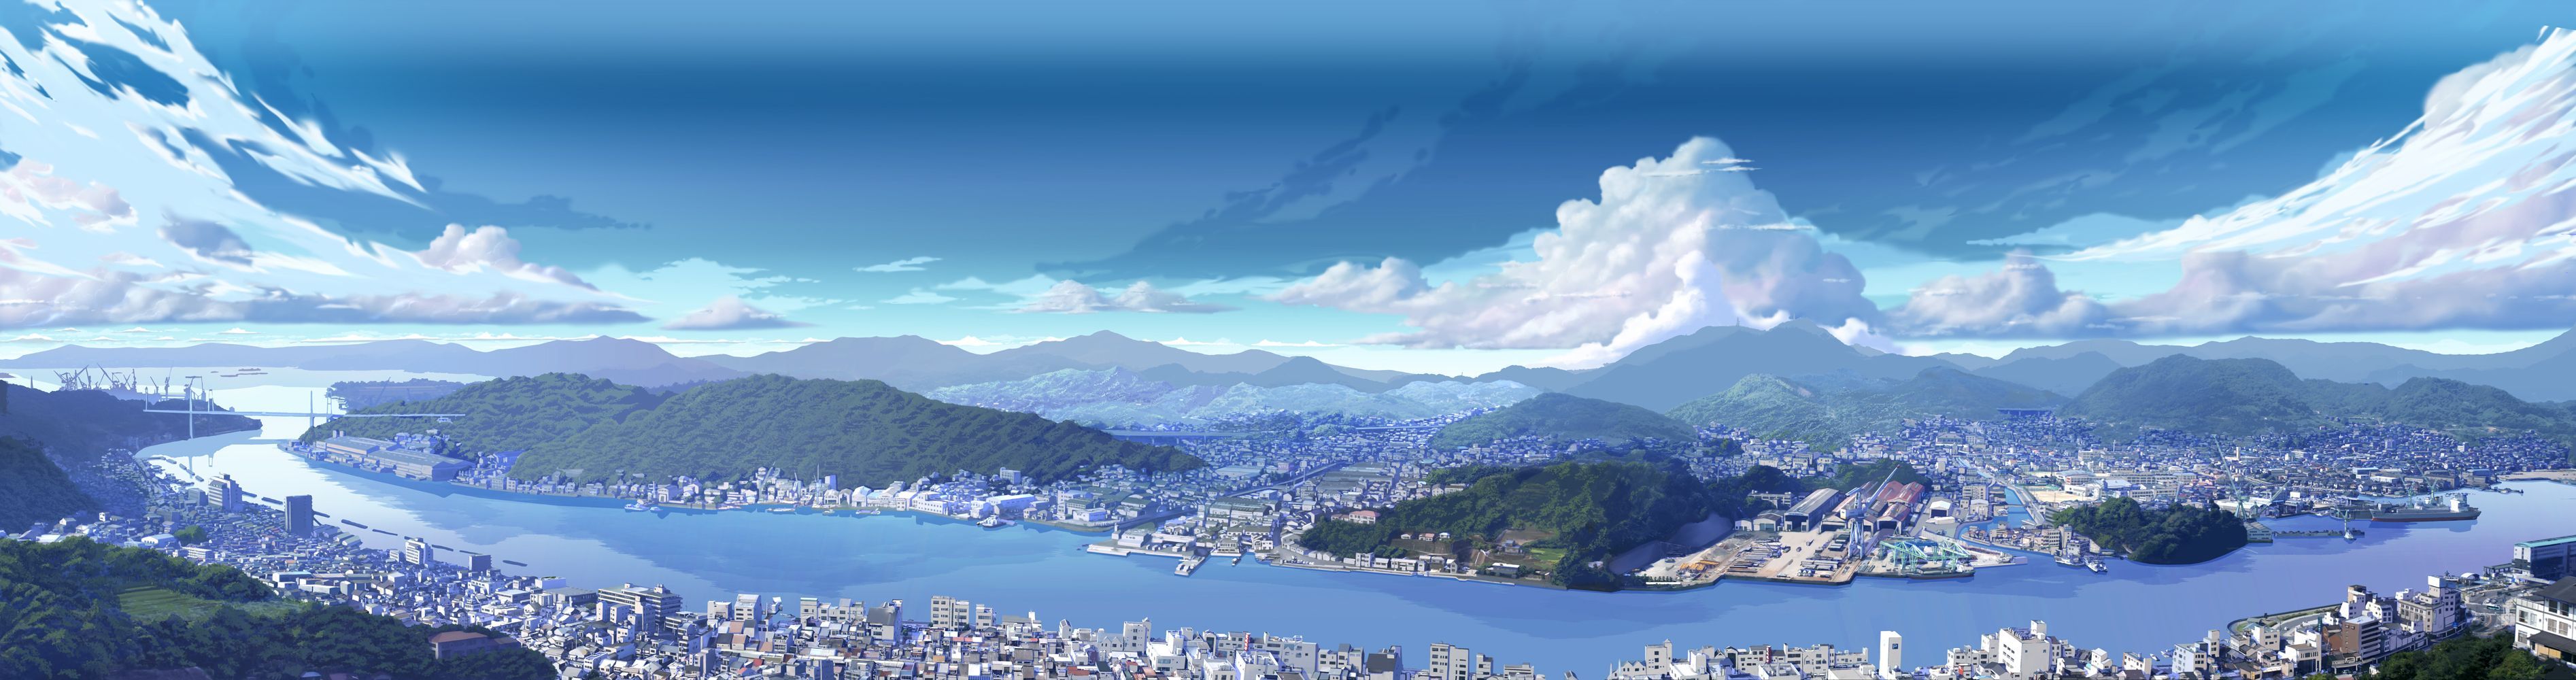 dual monitor wallpaper anime city landscape